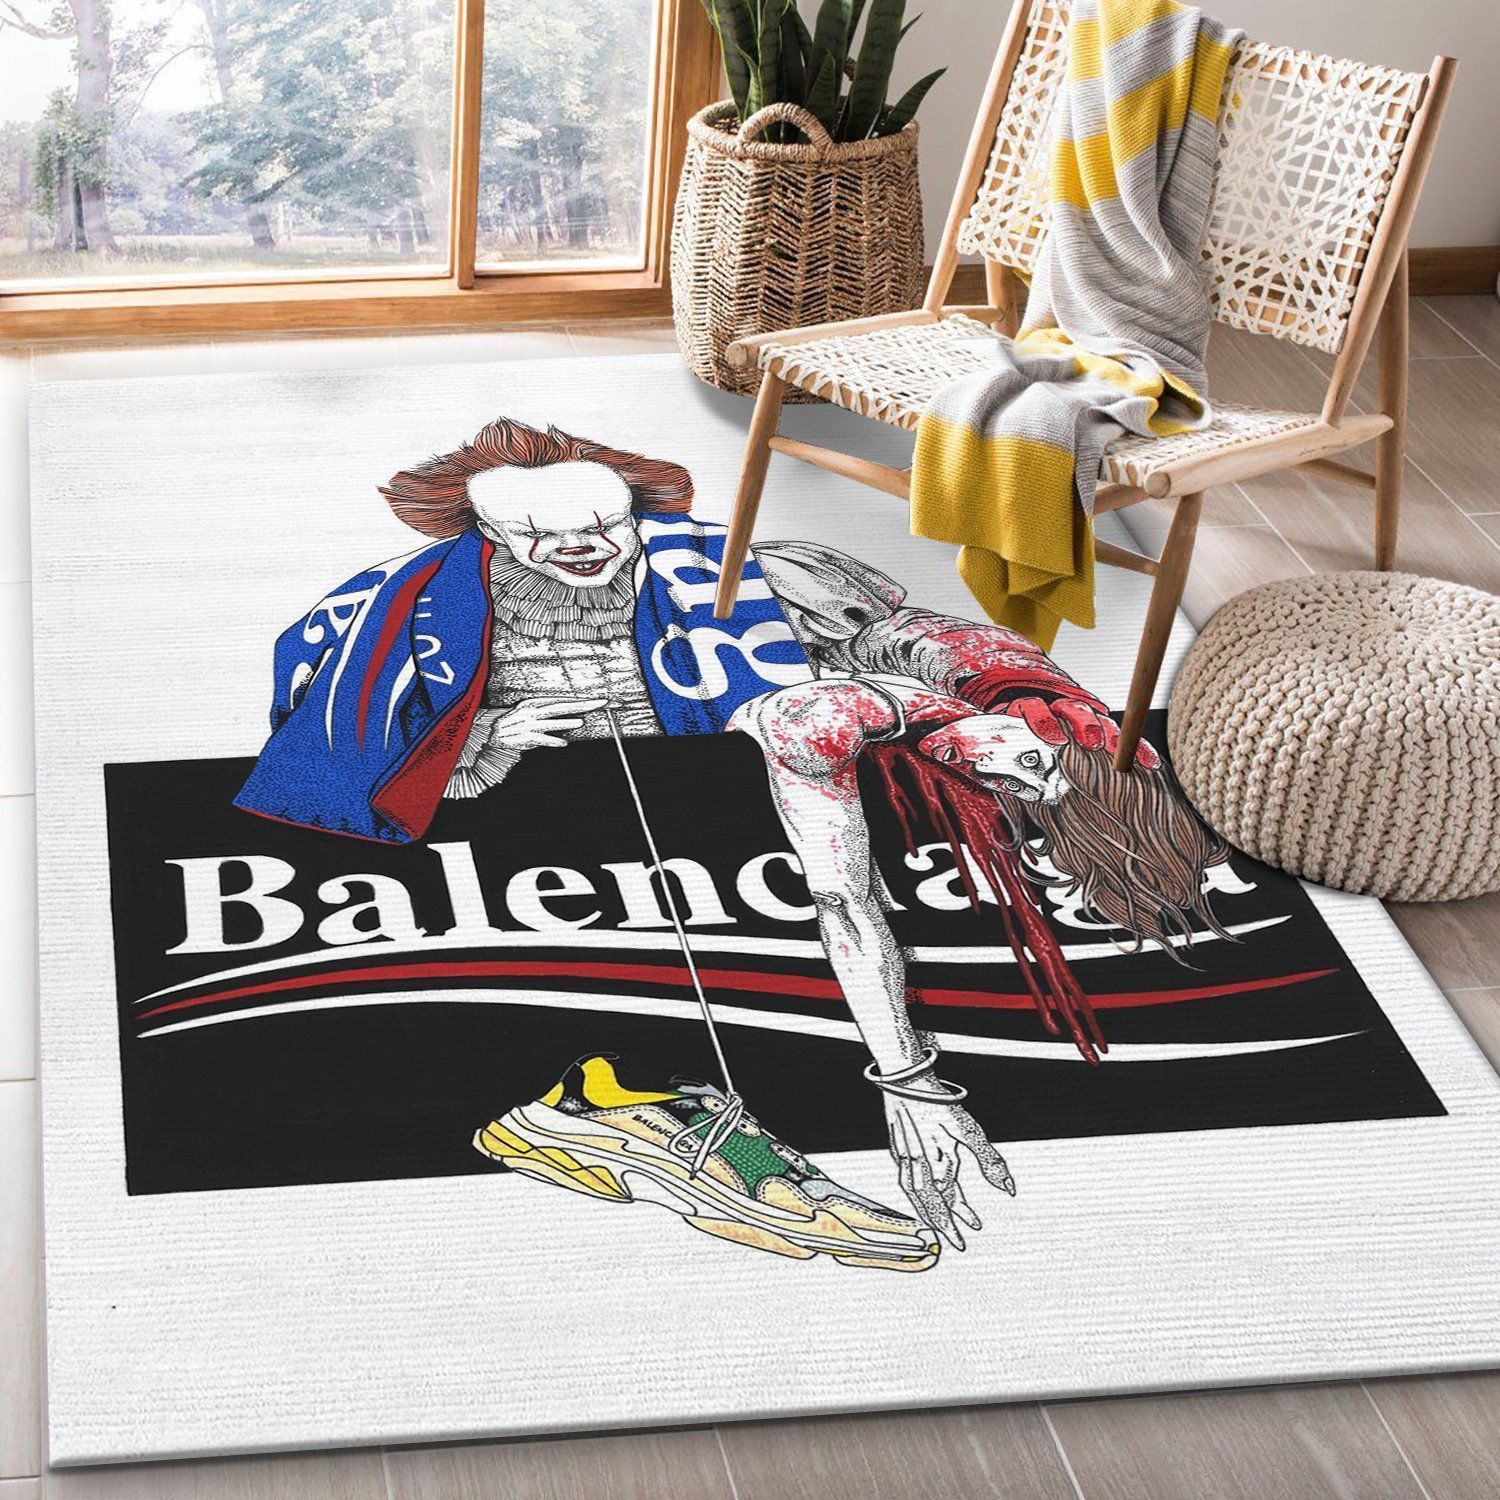 Balenciaga Ft It Rugs Living Room Rug US Gift Decor - Indoor Outdoor Rugs